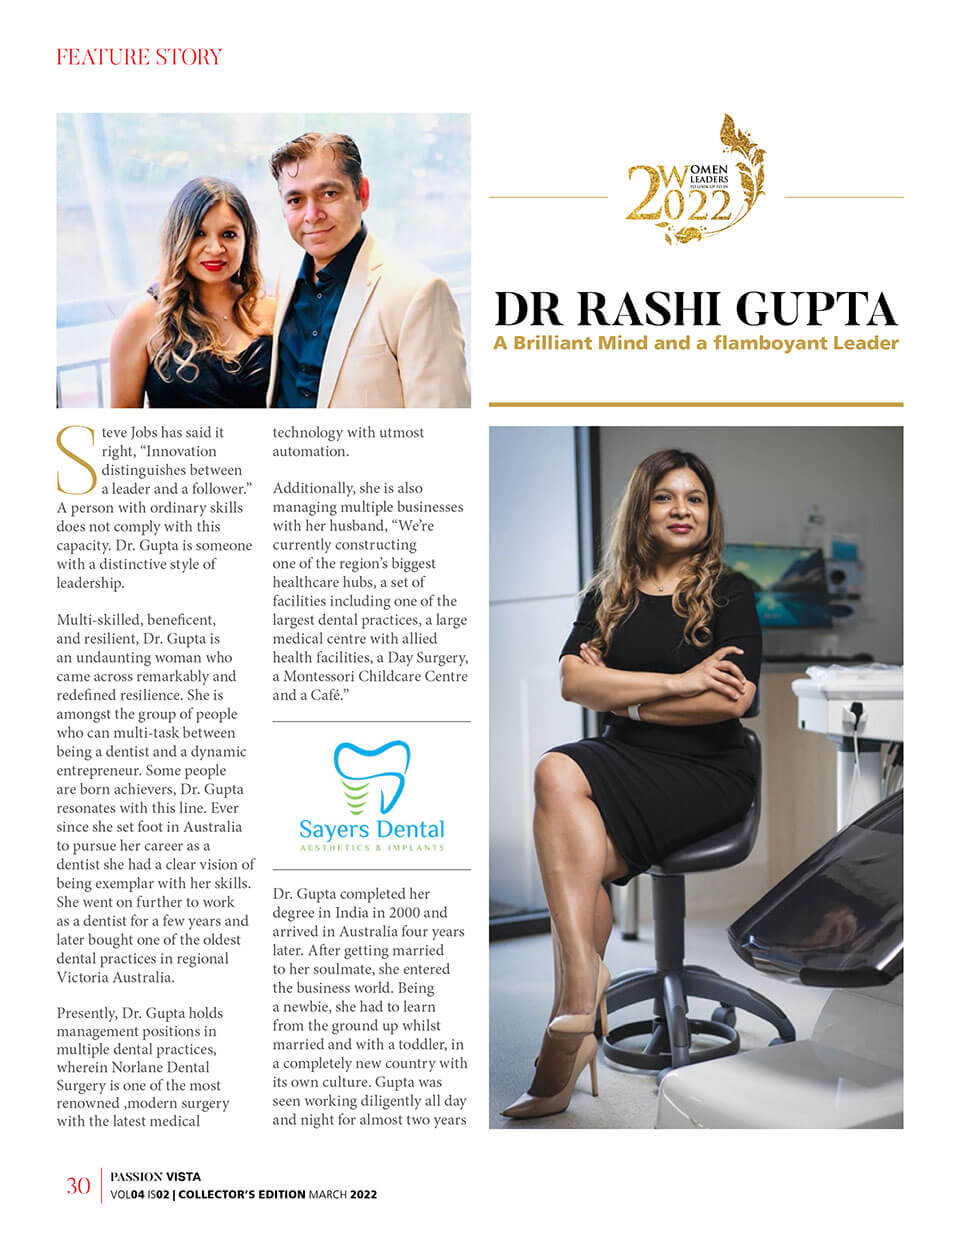 dr rashi gupta passion vista magazine story